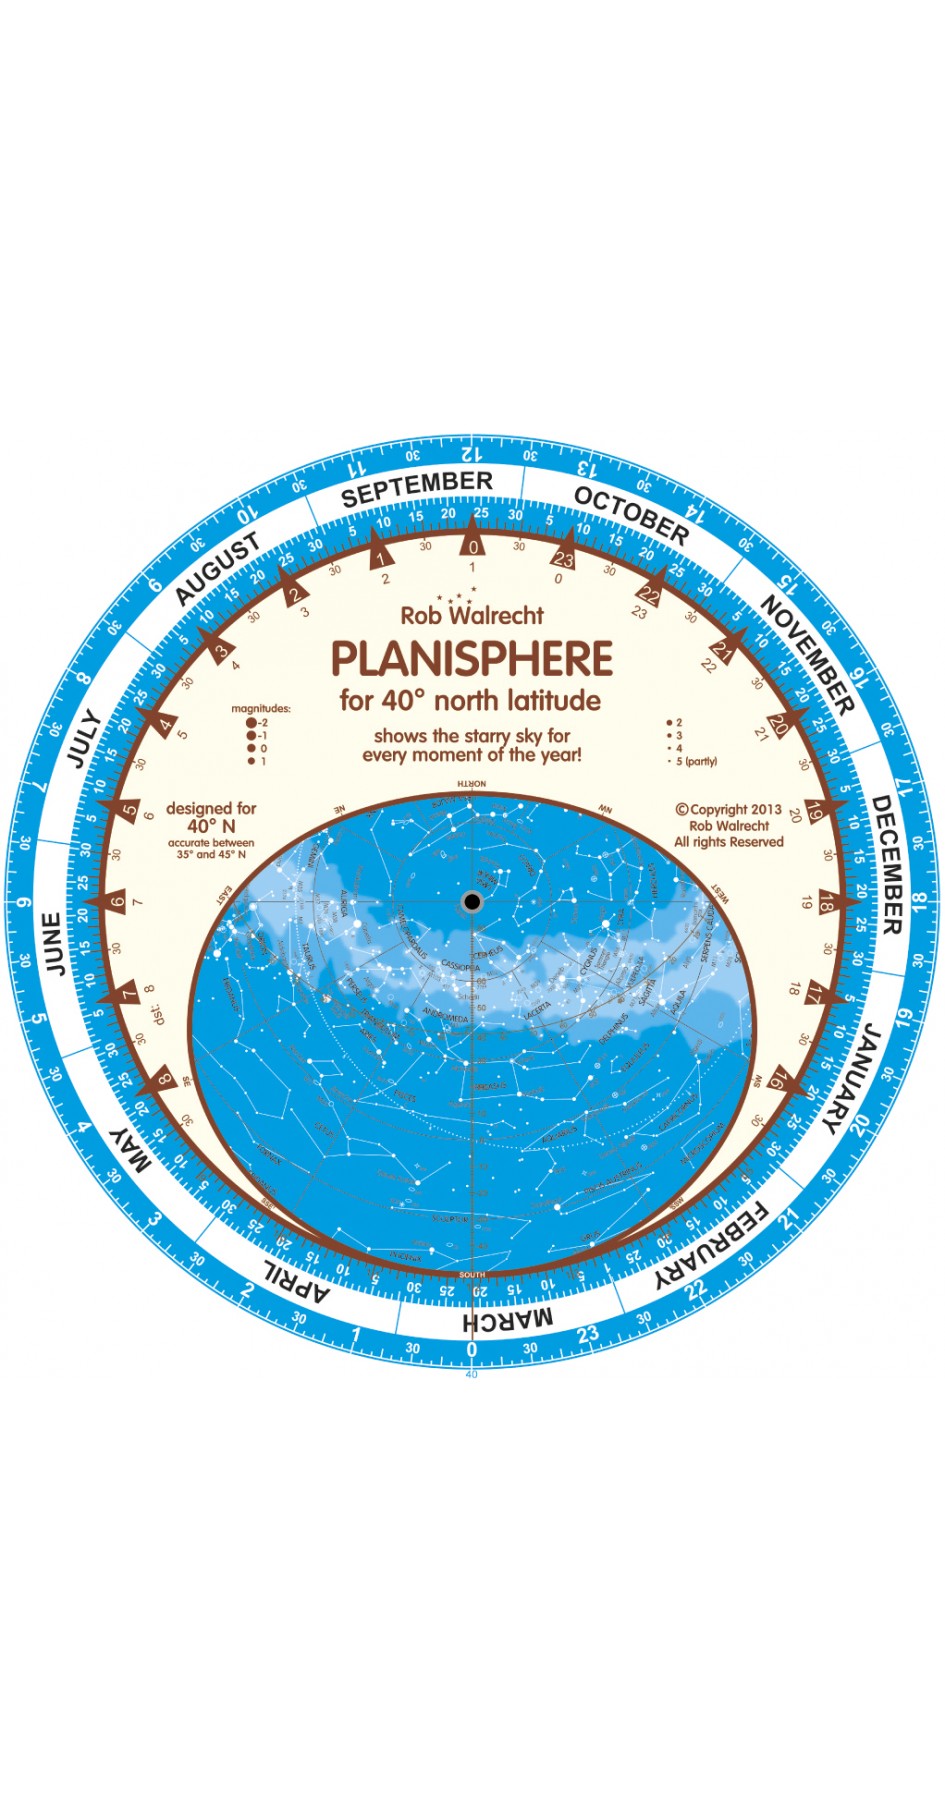 Planisphere for 40° North latitude